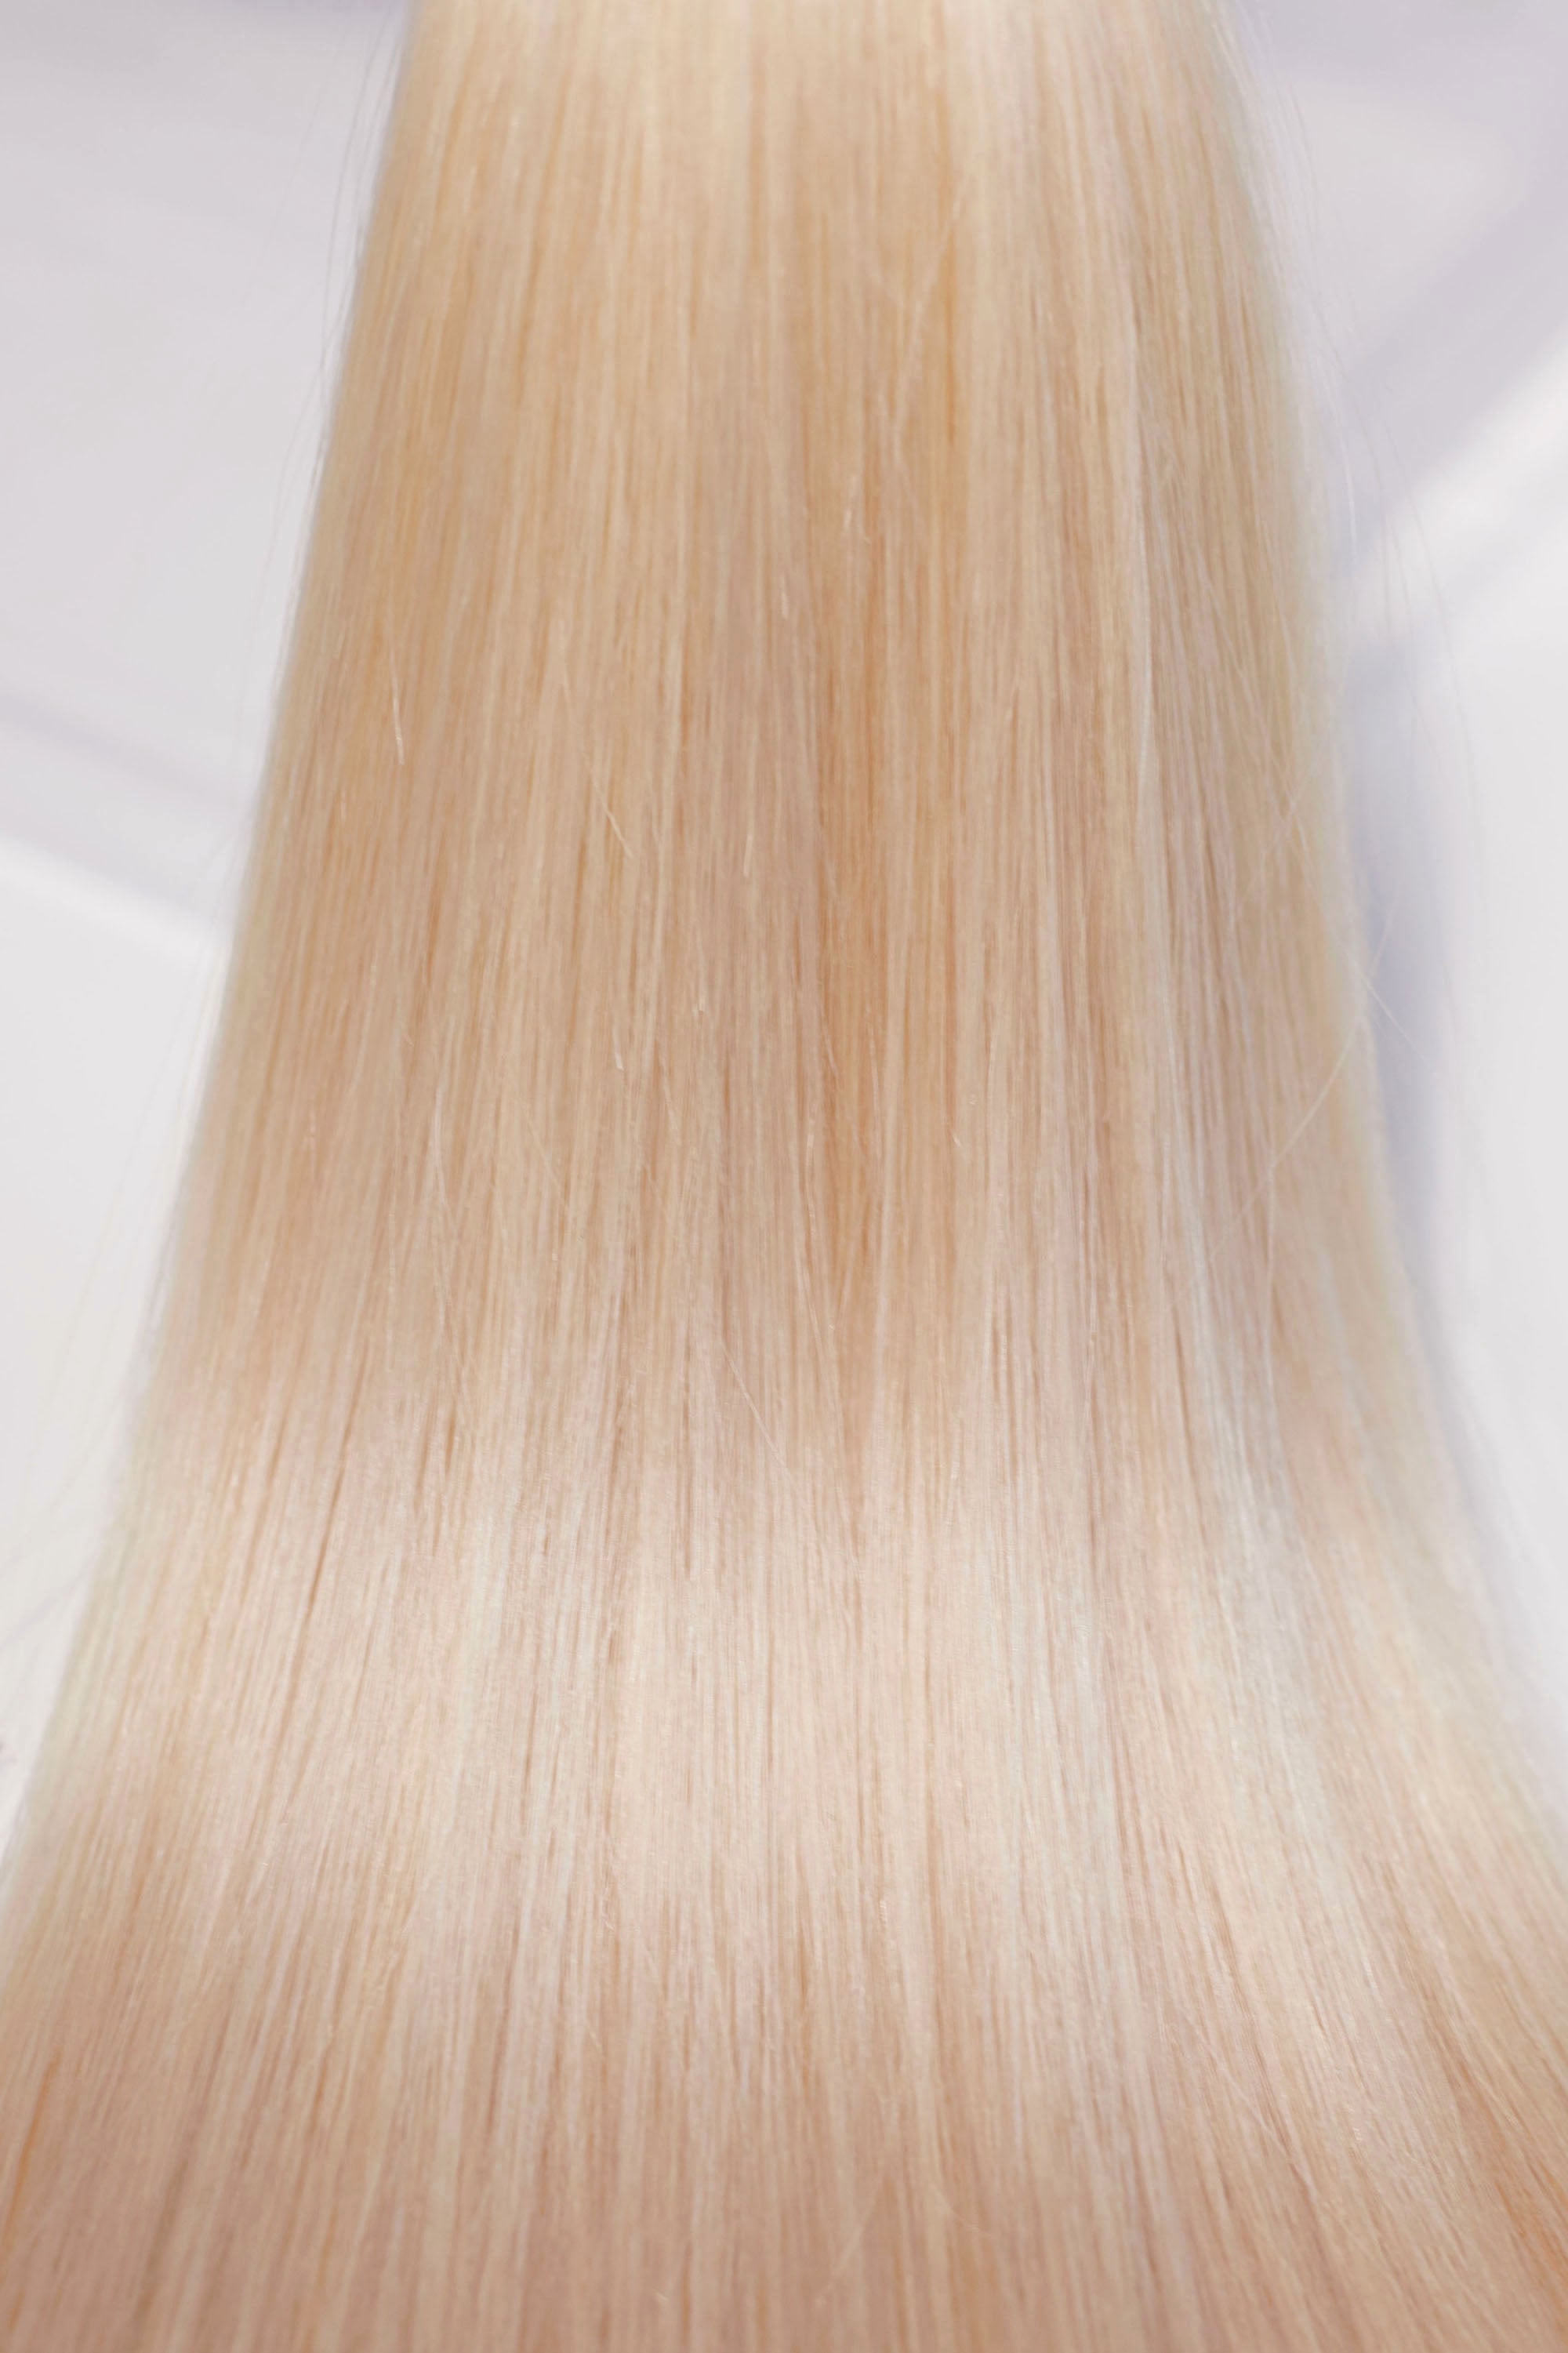 Behair professional Keratin Tip "Premium" 26" (65cm) Natural Straight Platinum Blond #60 - 25g (Micro - 0.5g each pcs) hair extensions